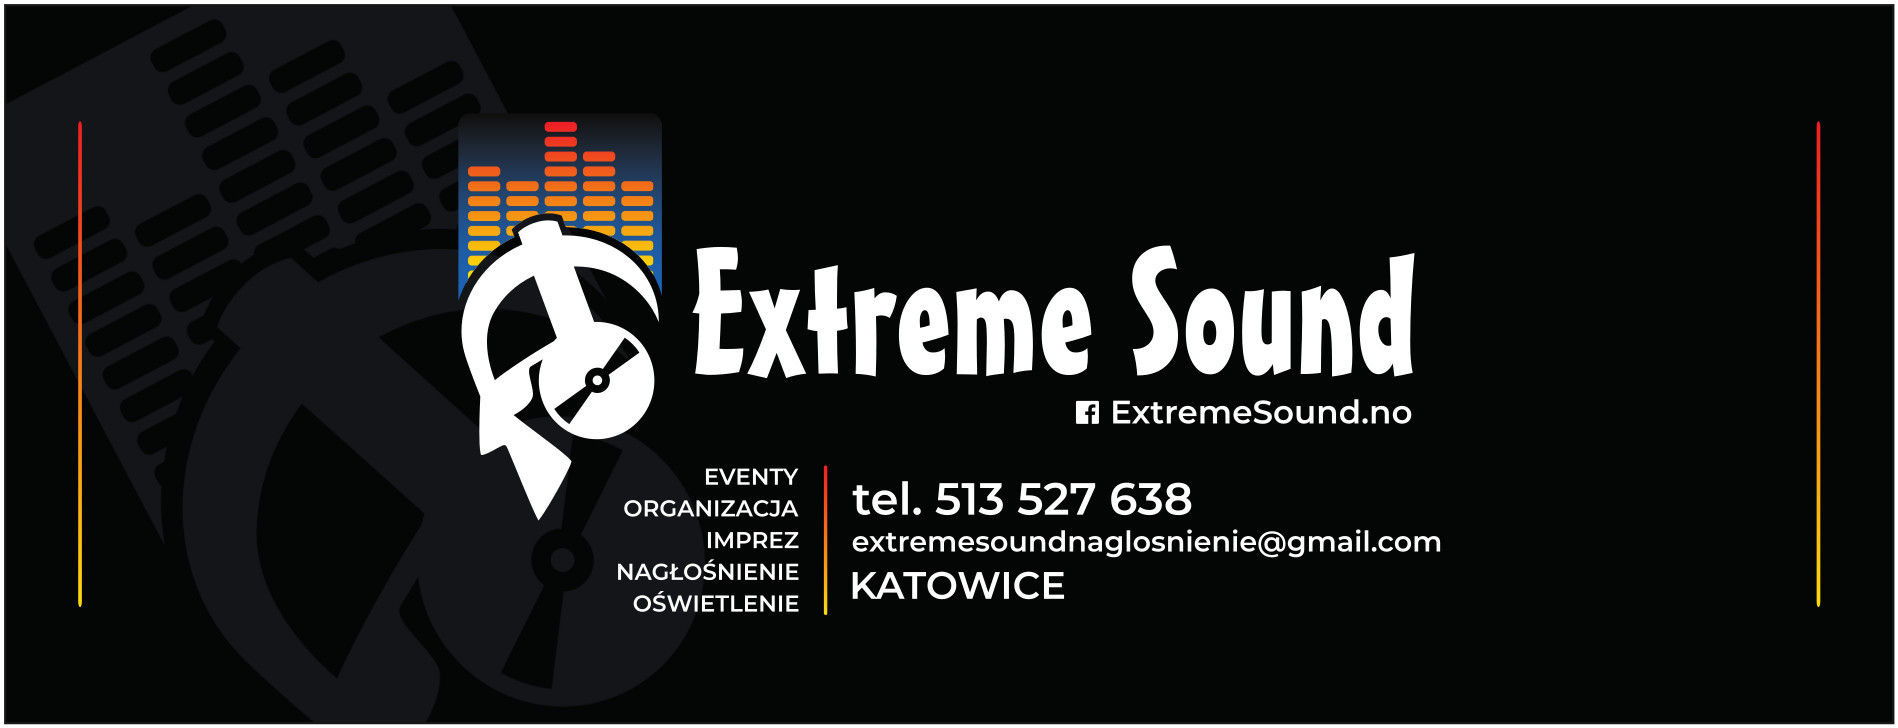 extreme sound